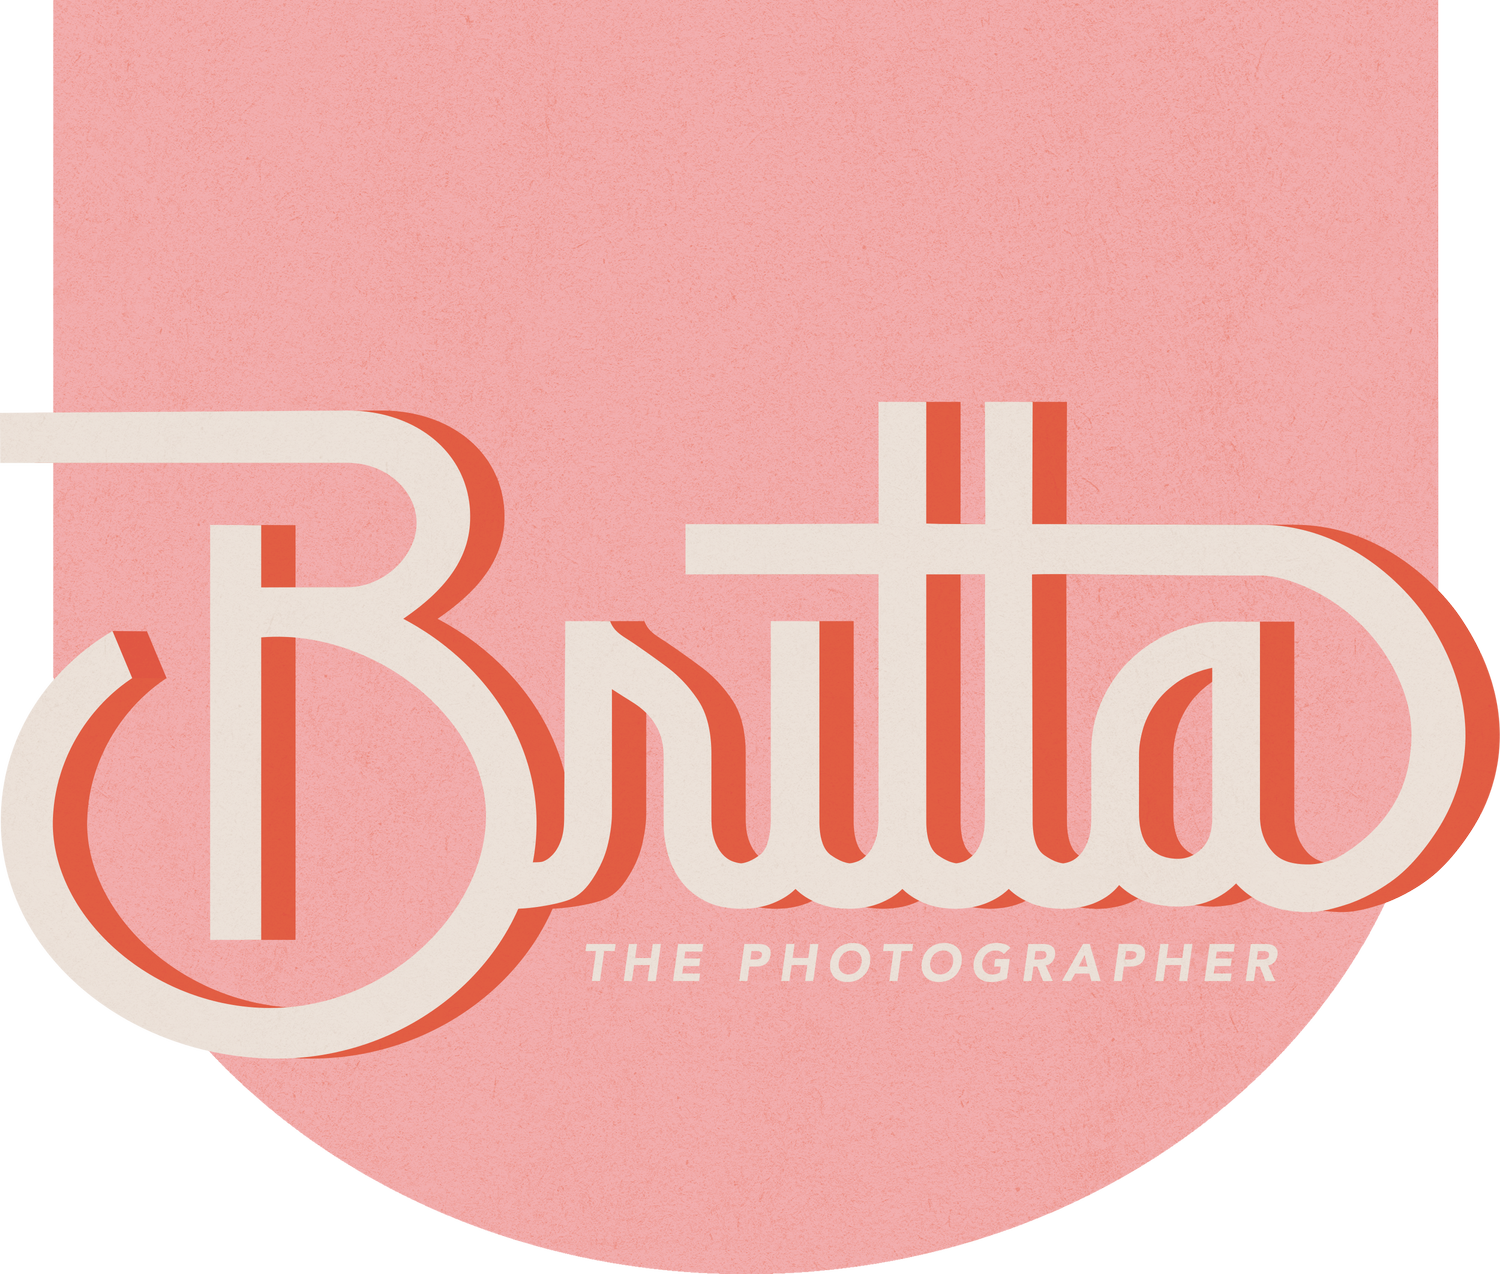 Britta the Photographer